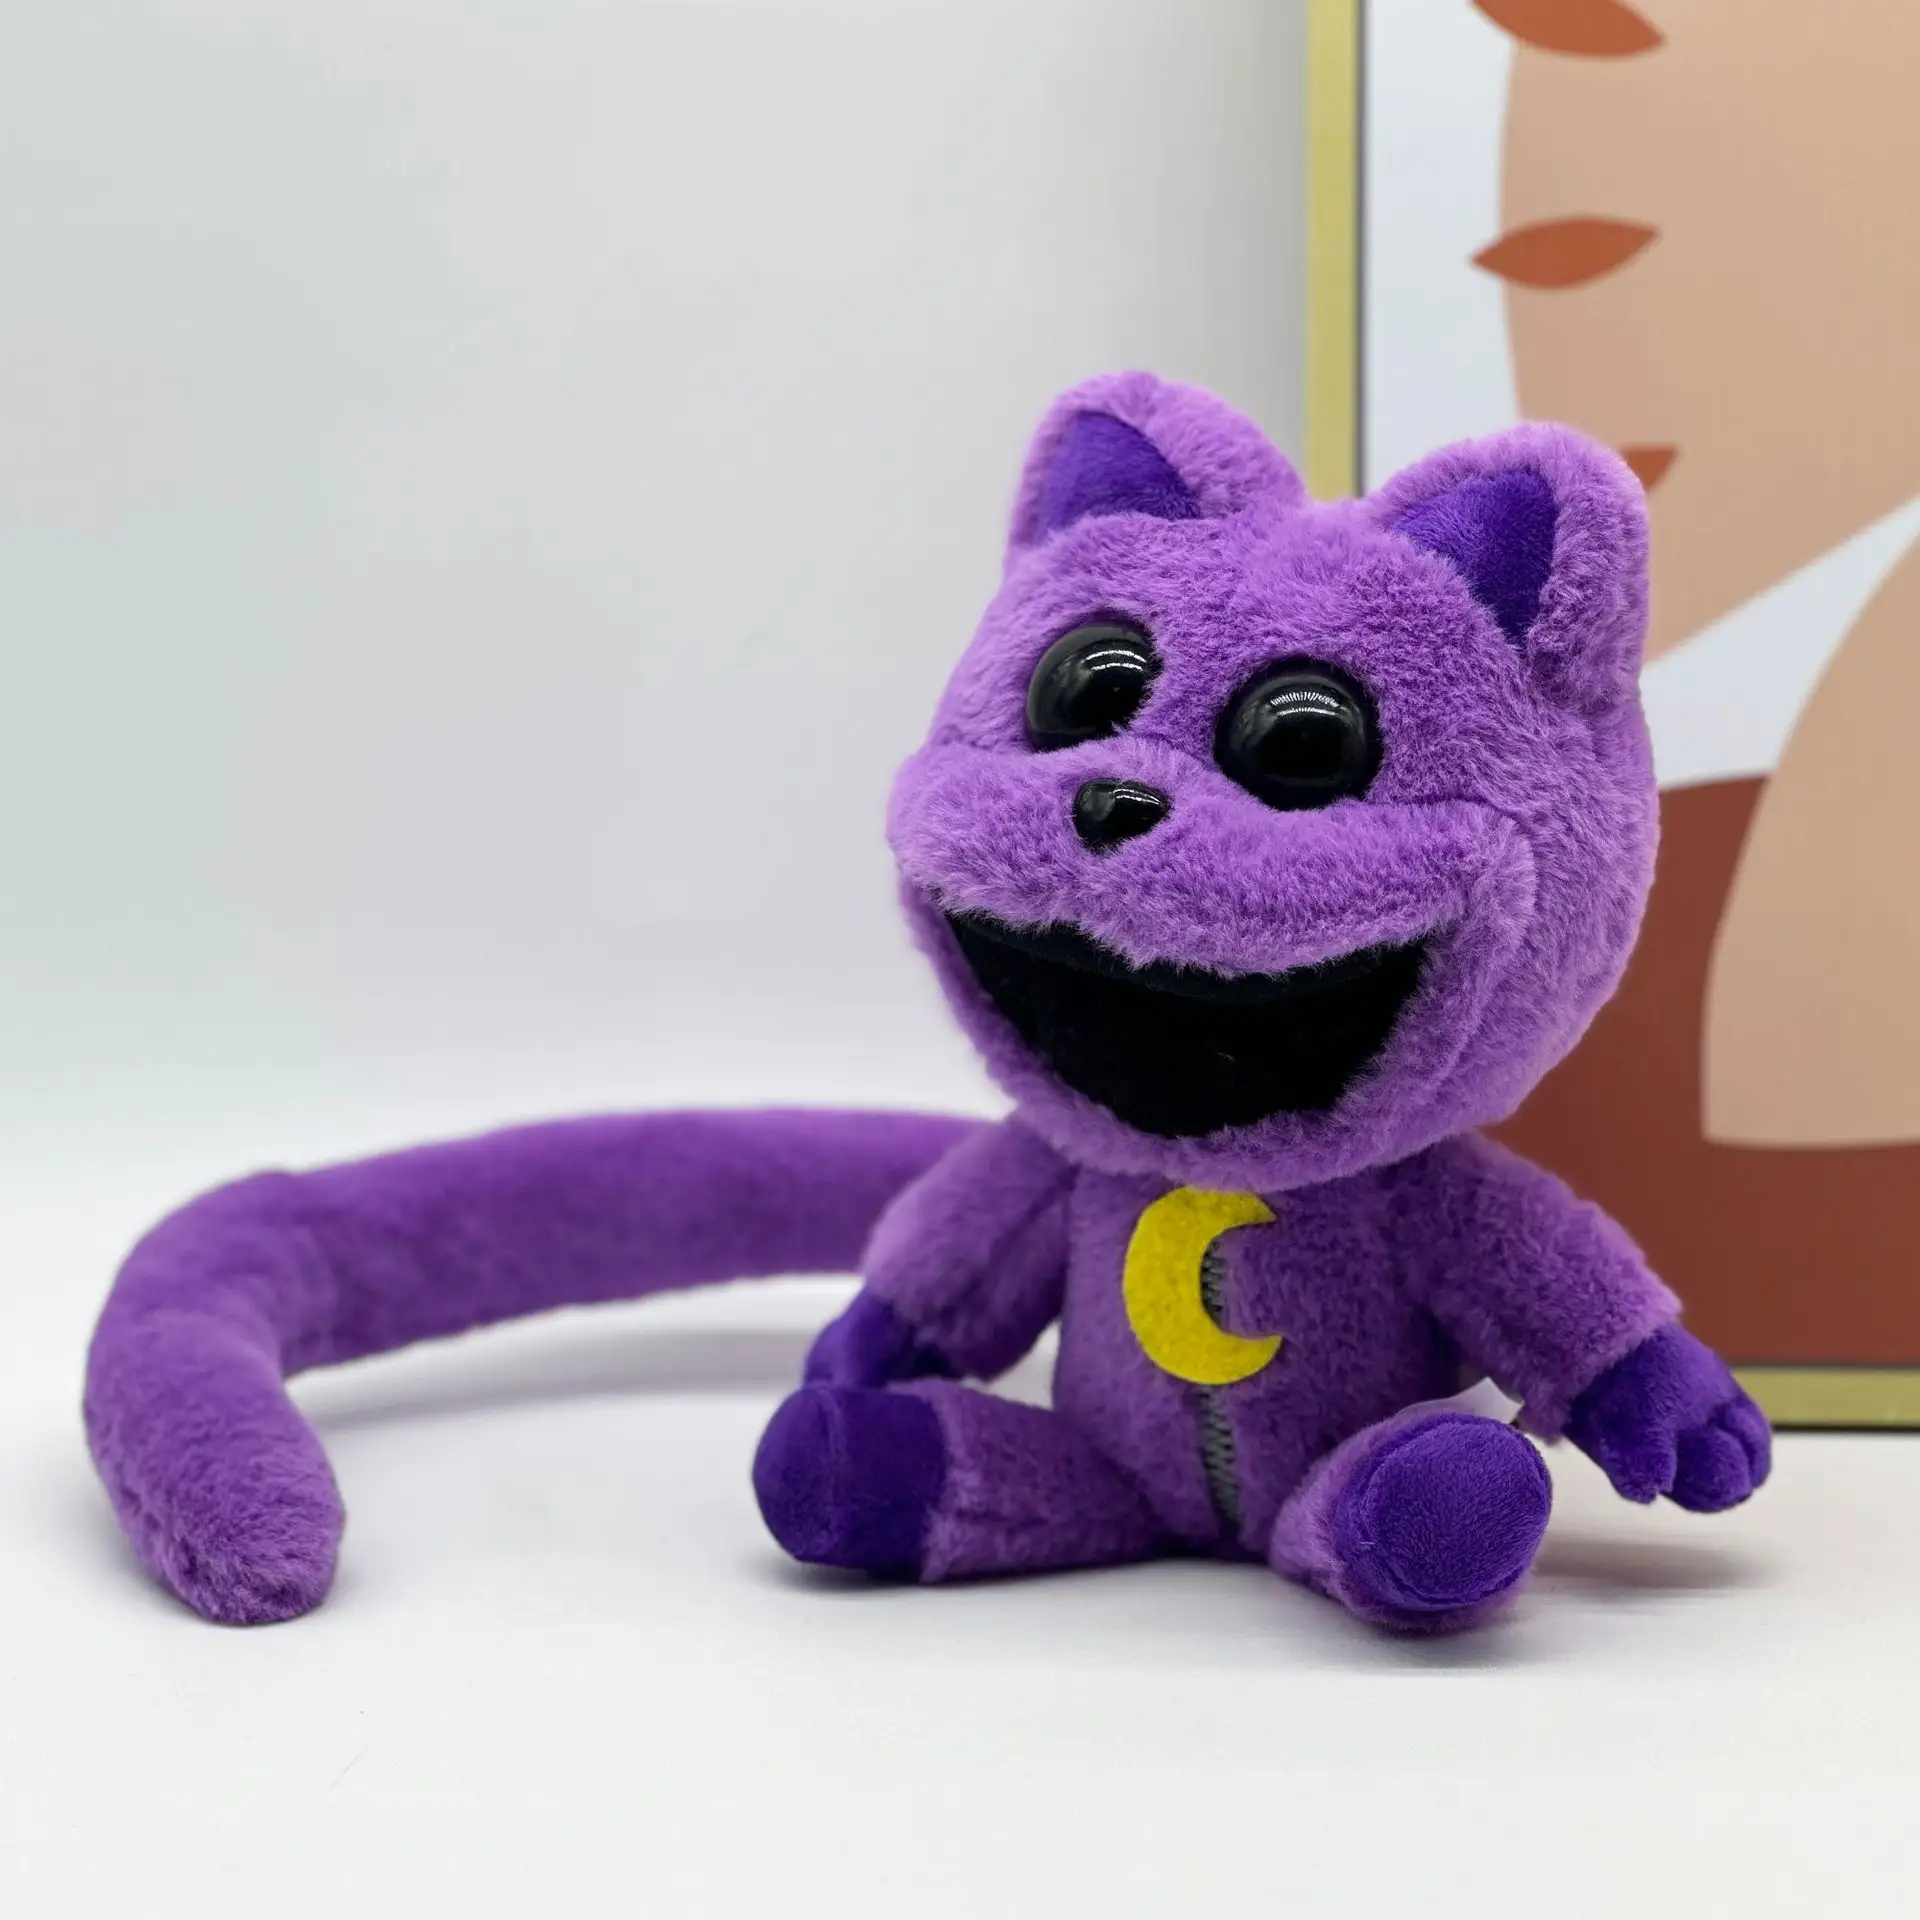 Nuevo anime de peluche criaturas sonrientes gato púrpura muñeca elefante azul juguetes de peluche